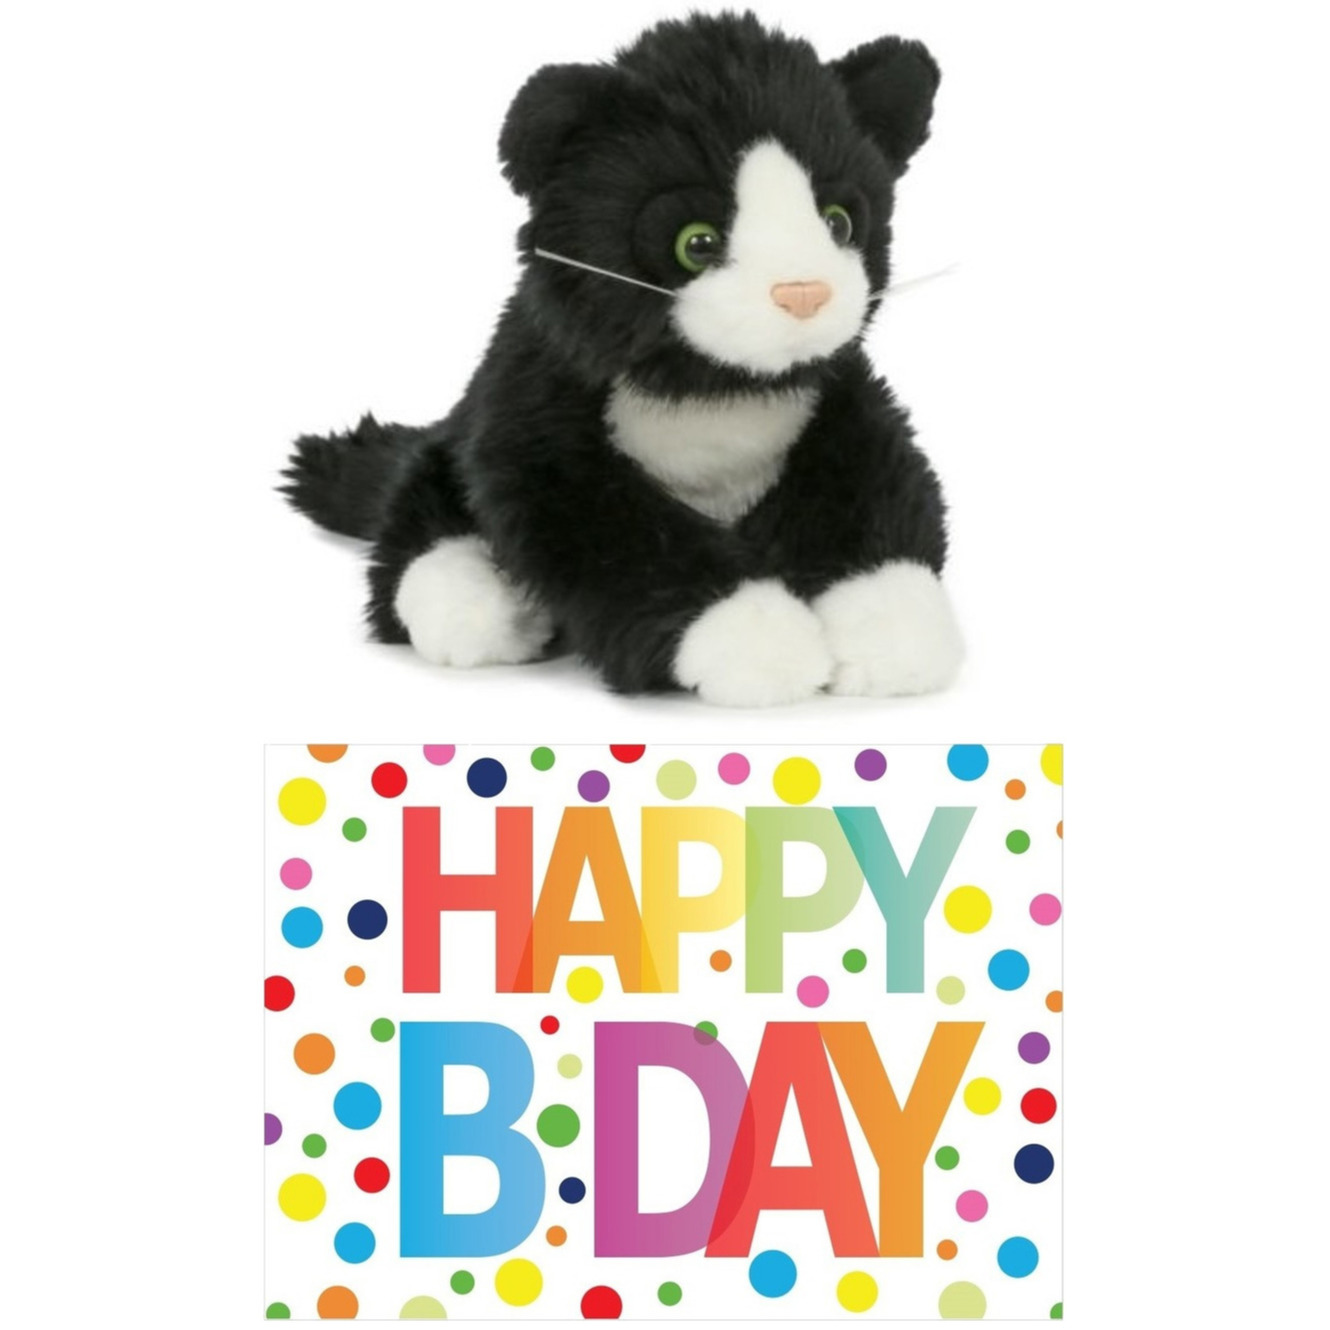 Cadeau setje pluche zwart-witte kat-poes knuffel 18 cm met Happy Birthday wenskaart